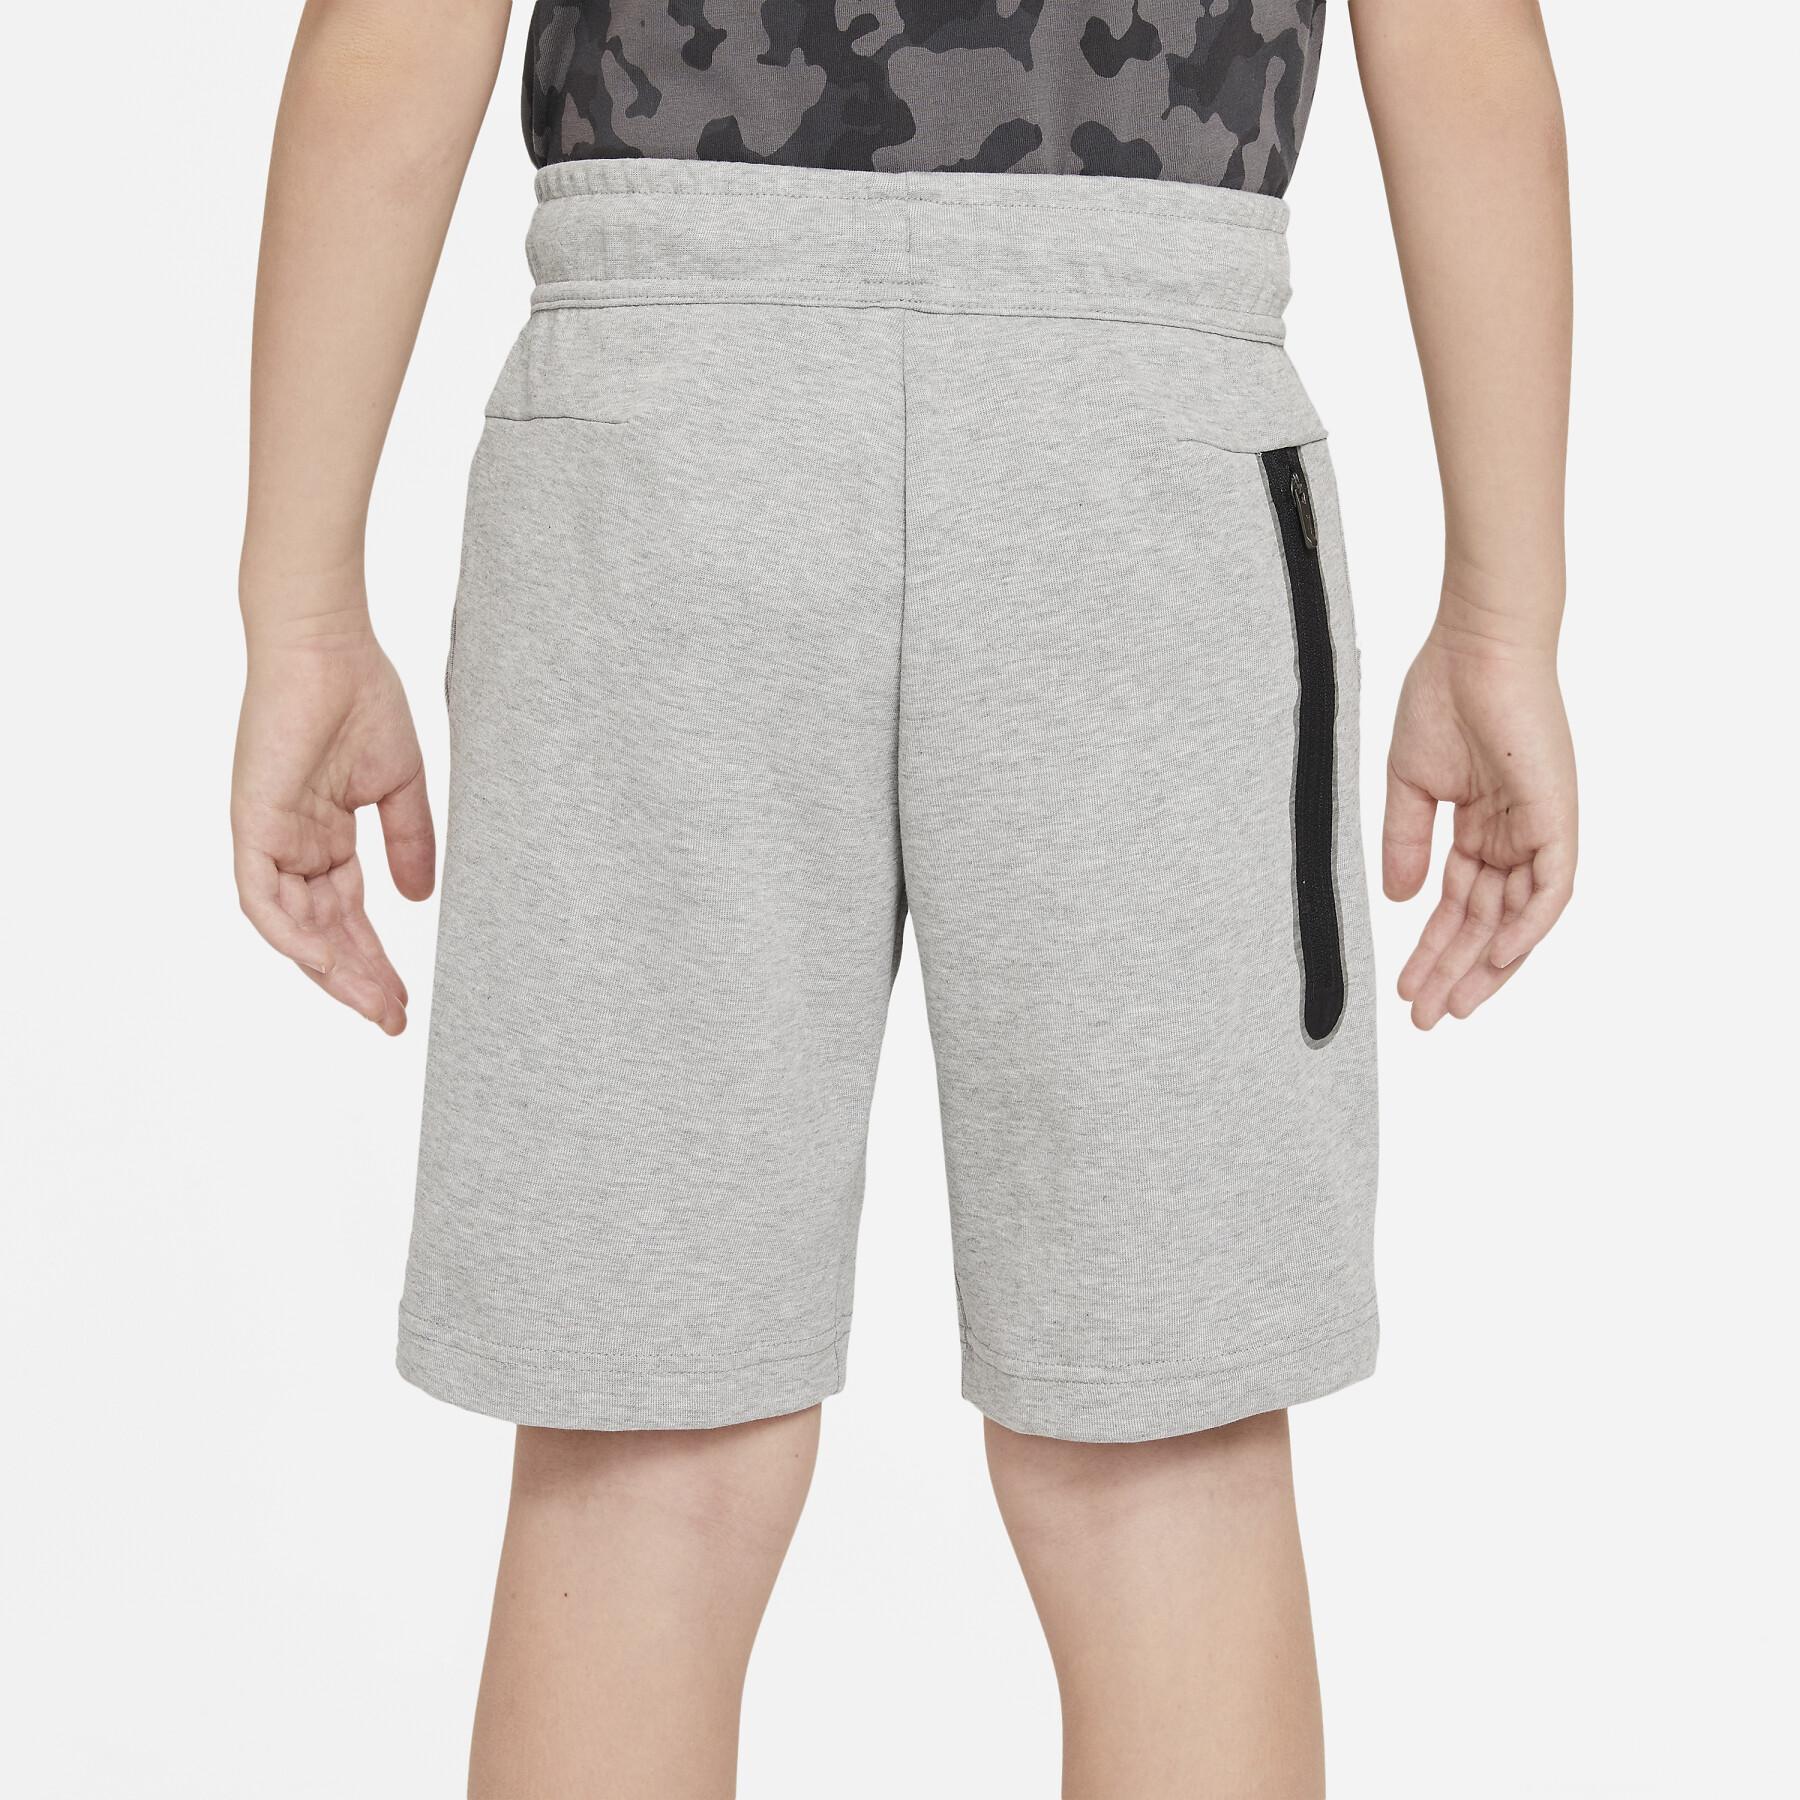 Shorts für Kinder Nike Tech Fleece